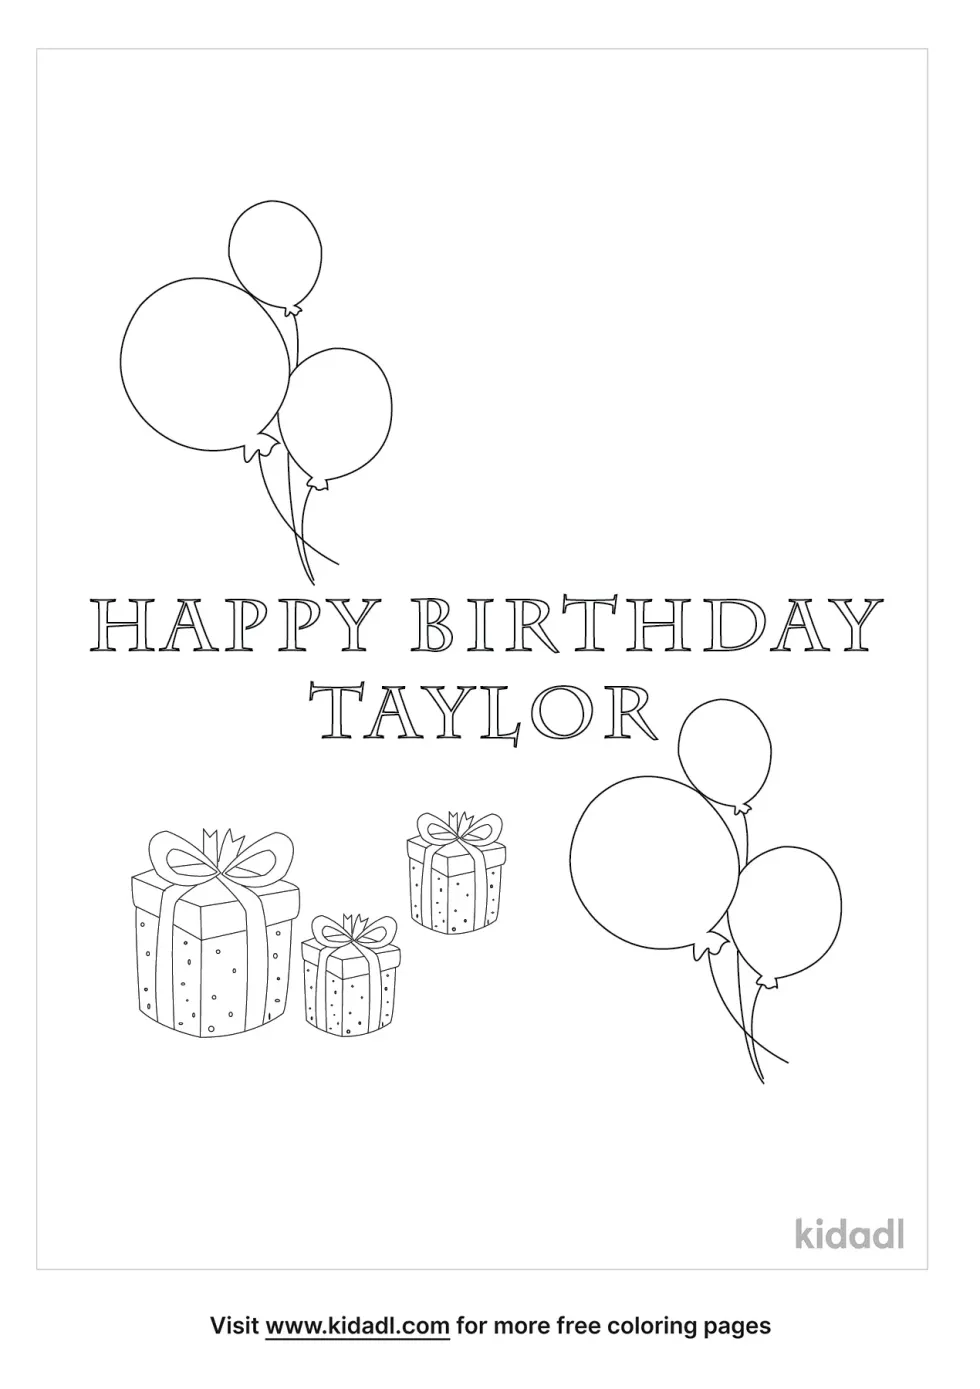 Happy Birthday Taylor